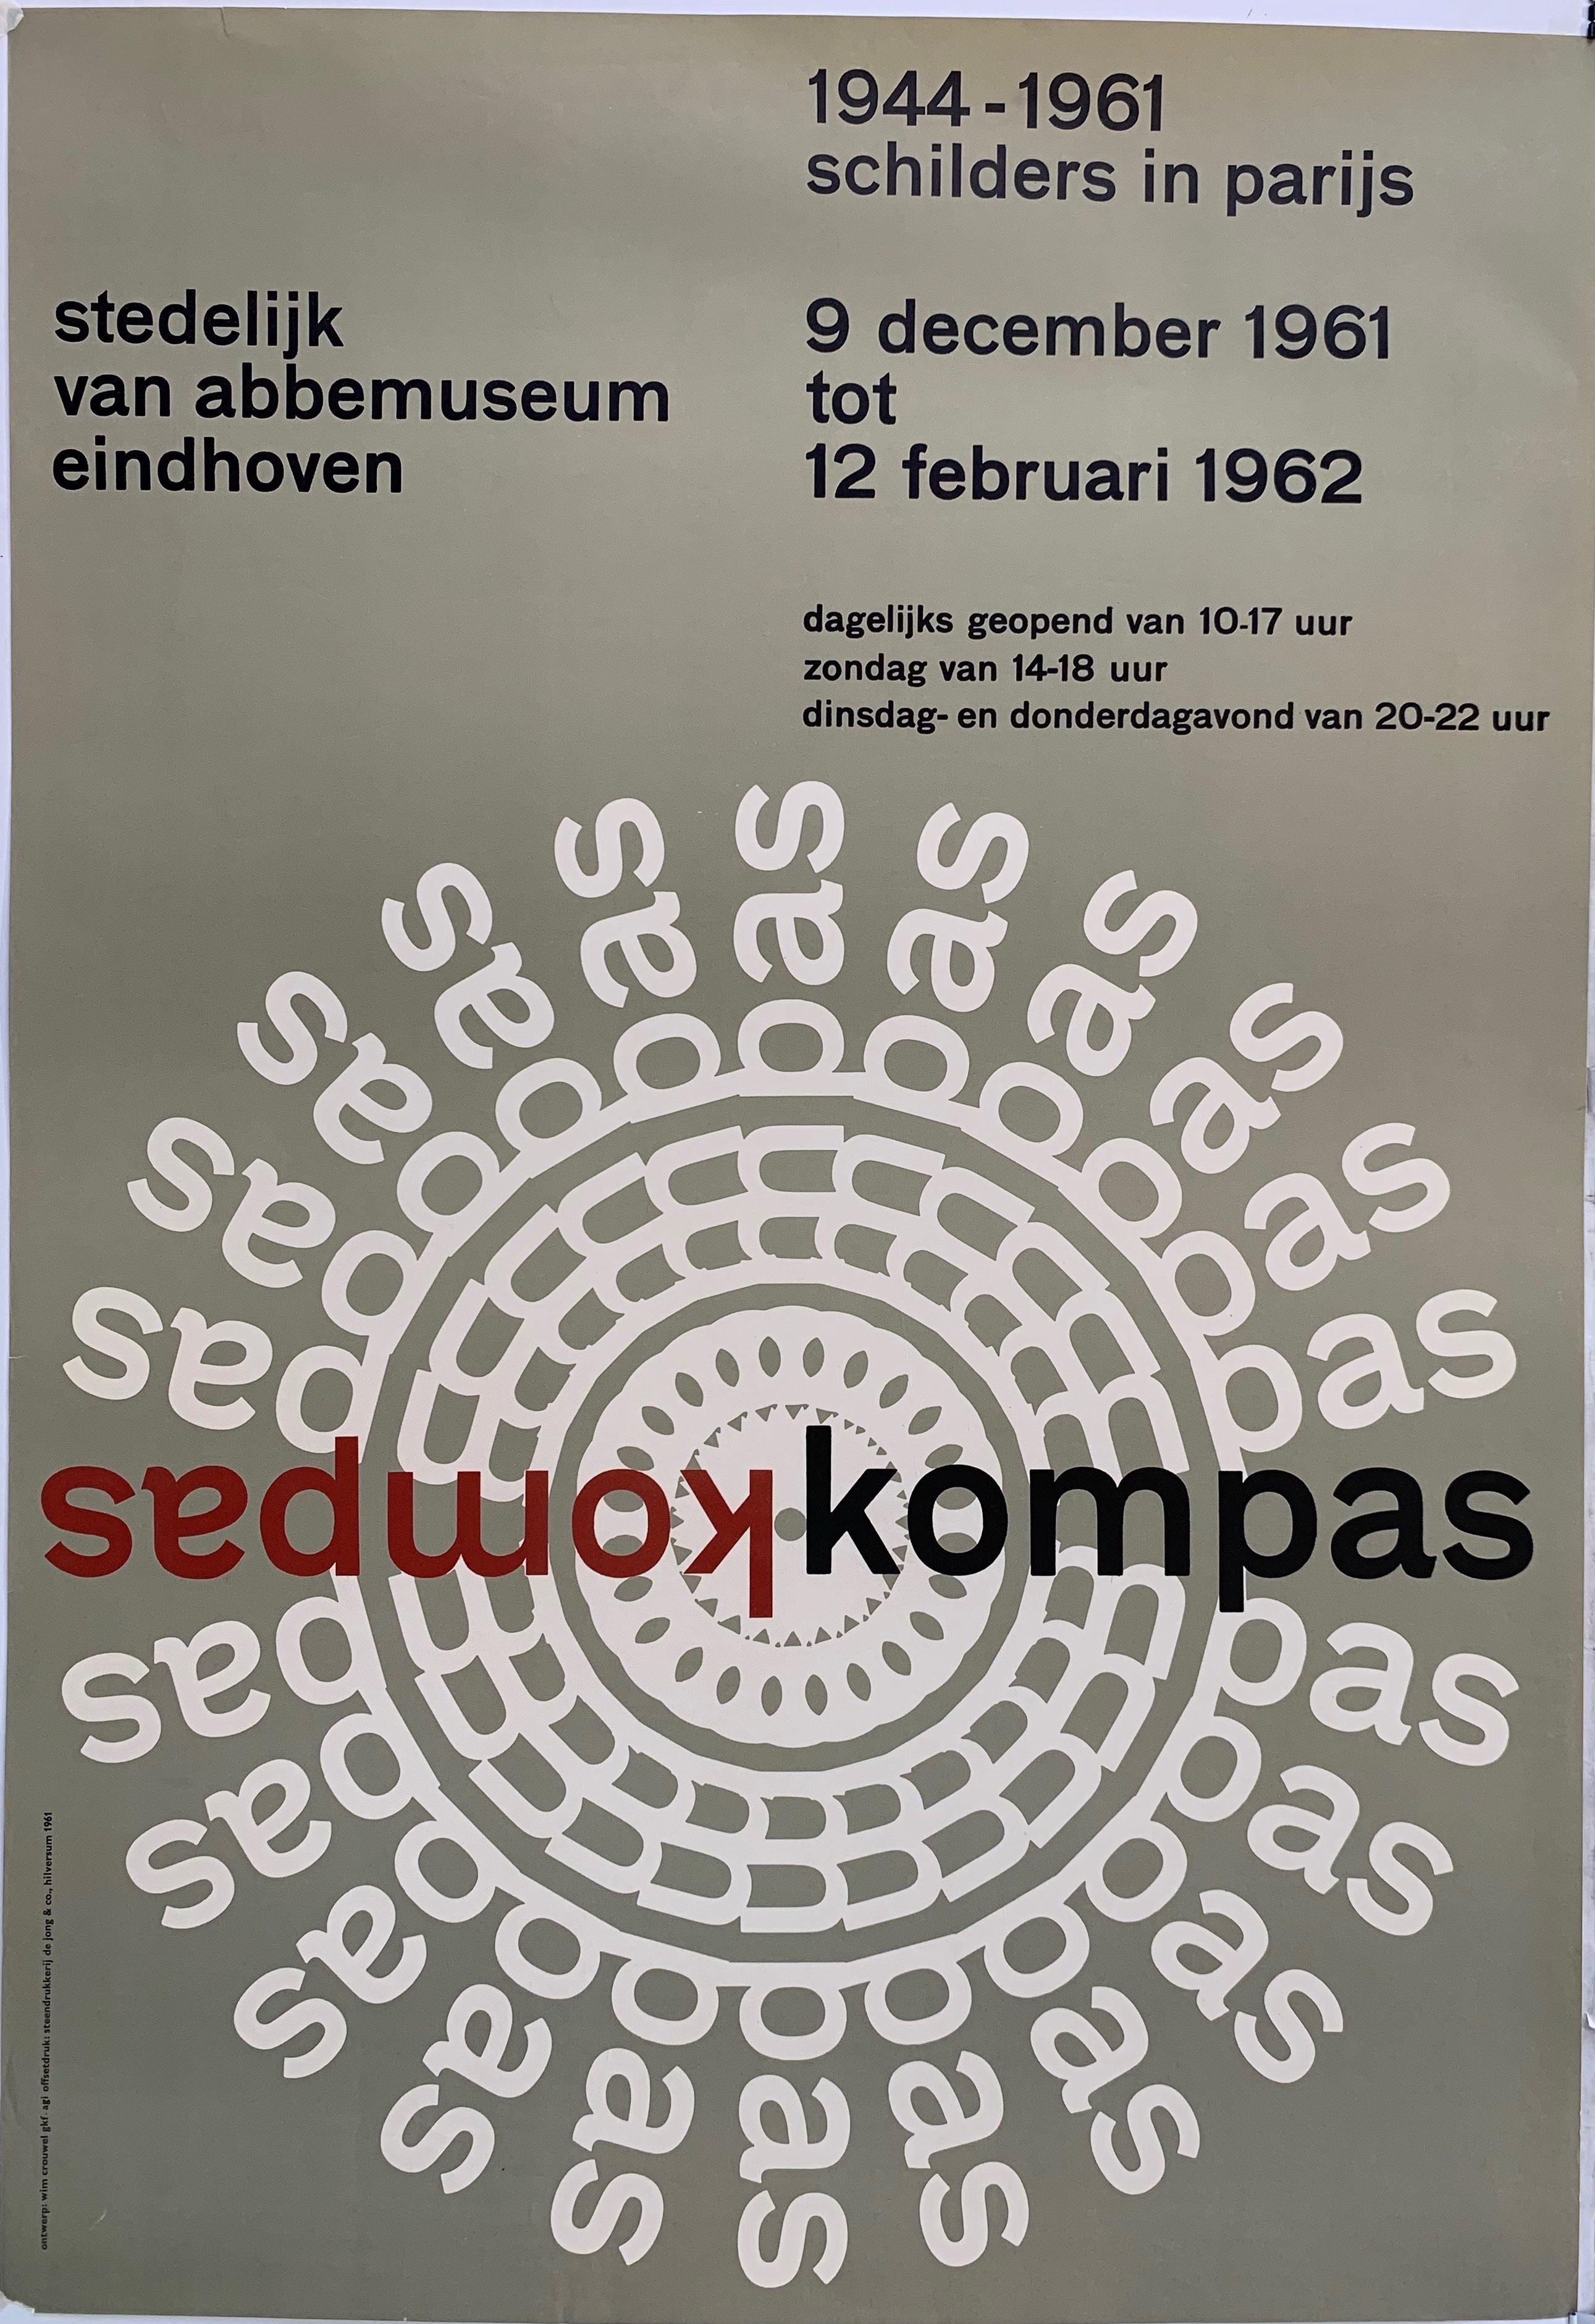 kompas "stedelijk abbemuseum eindhoven" - Poster Museum